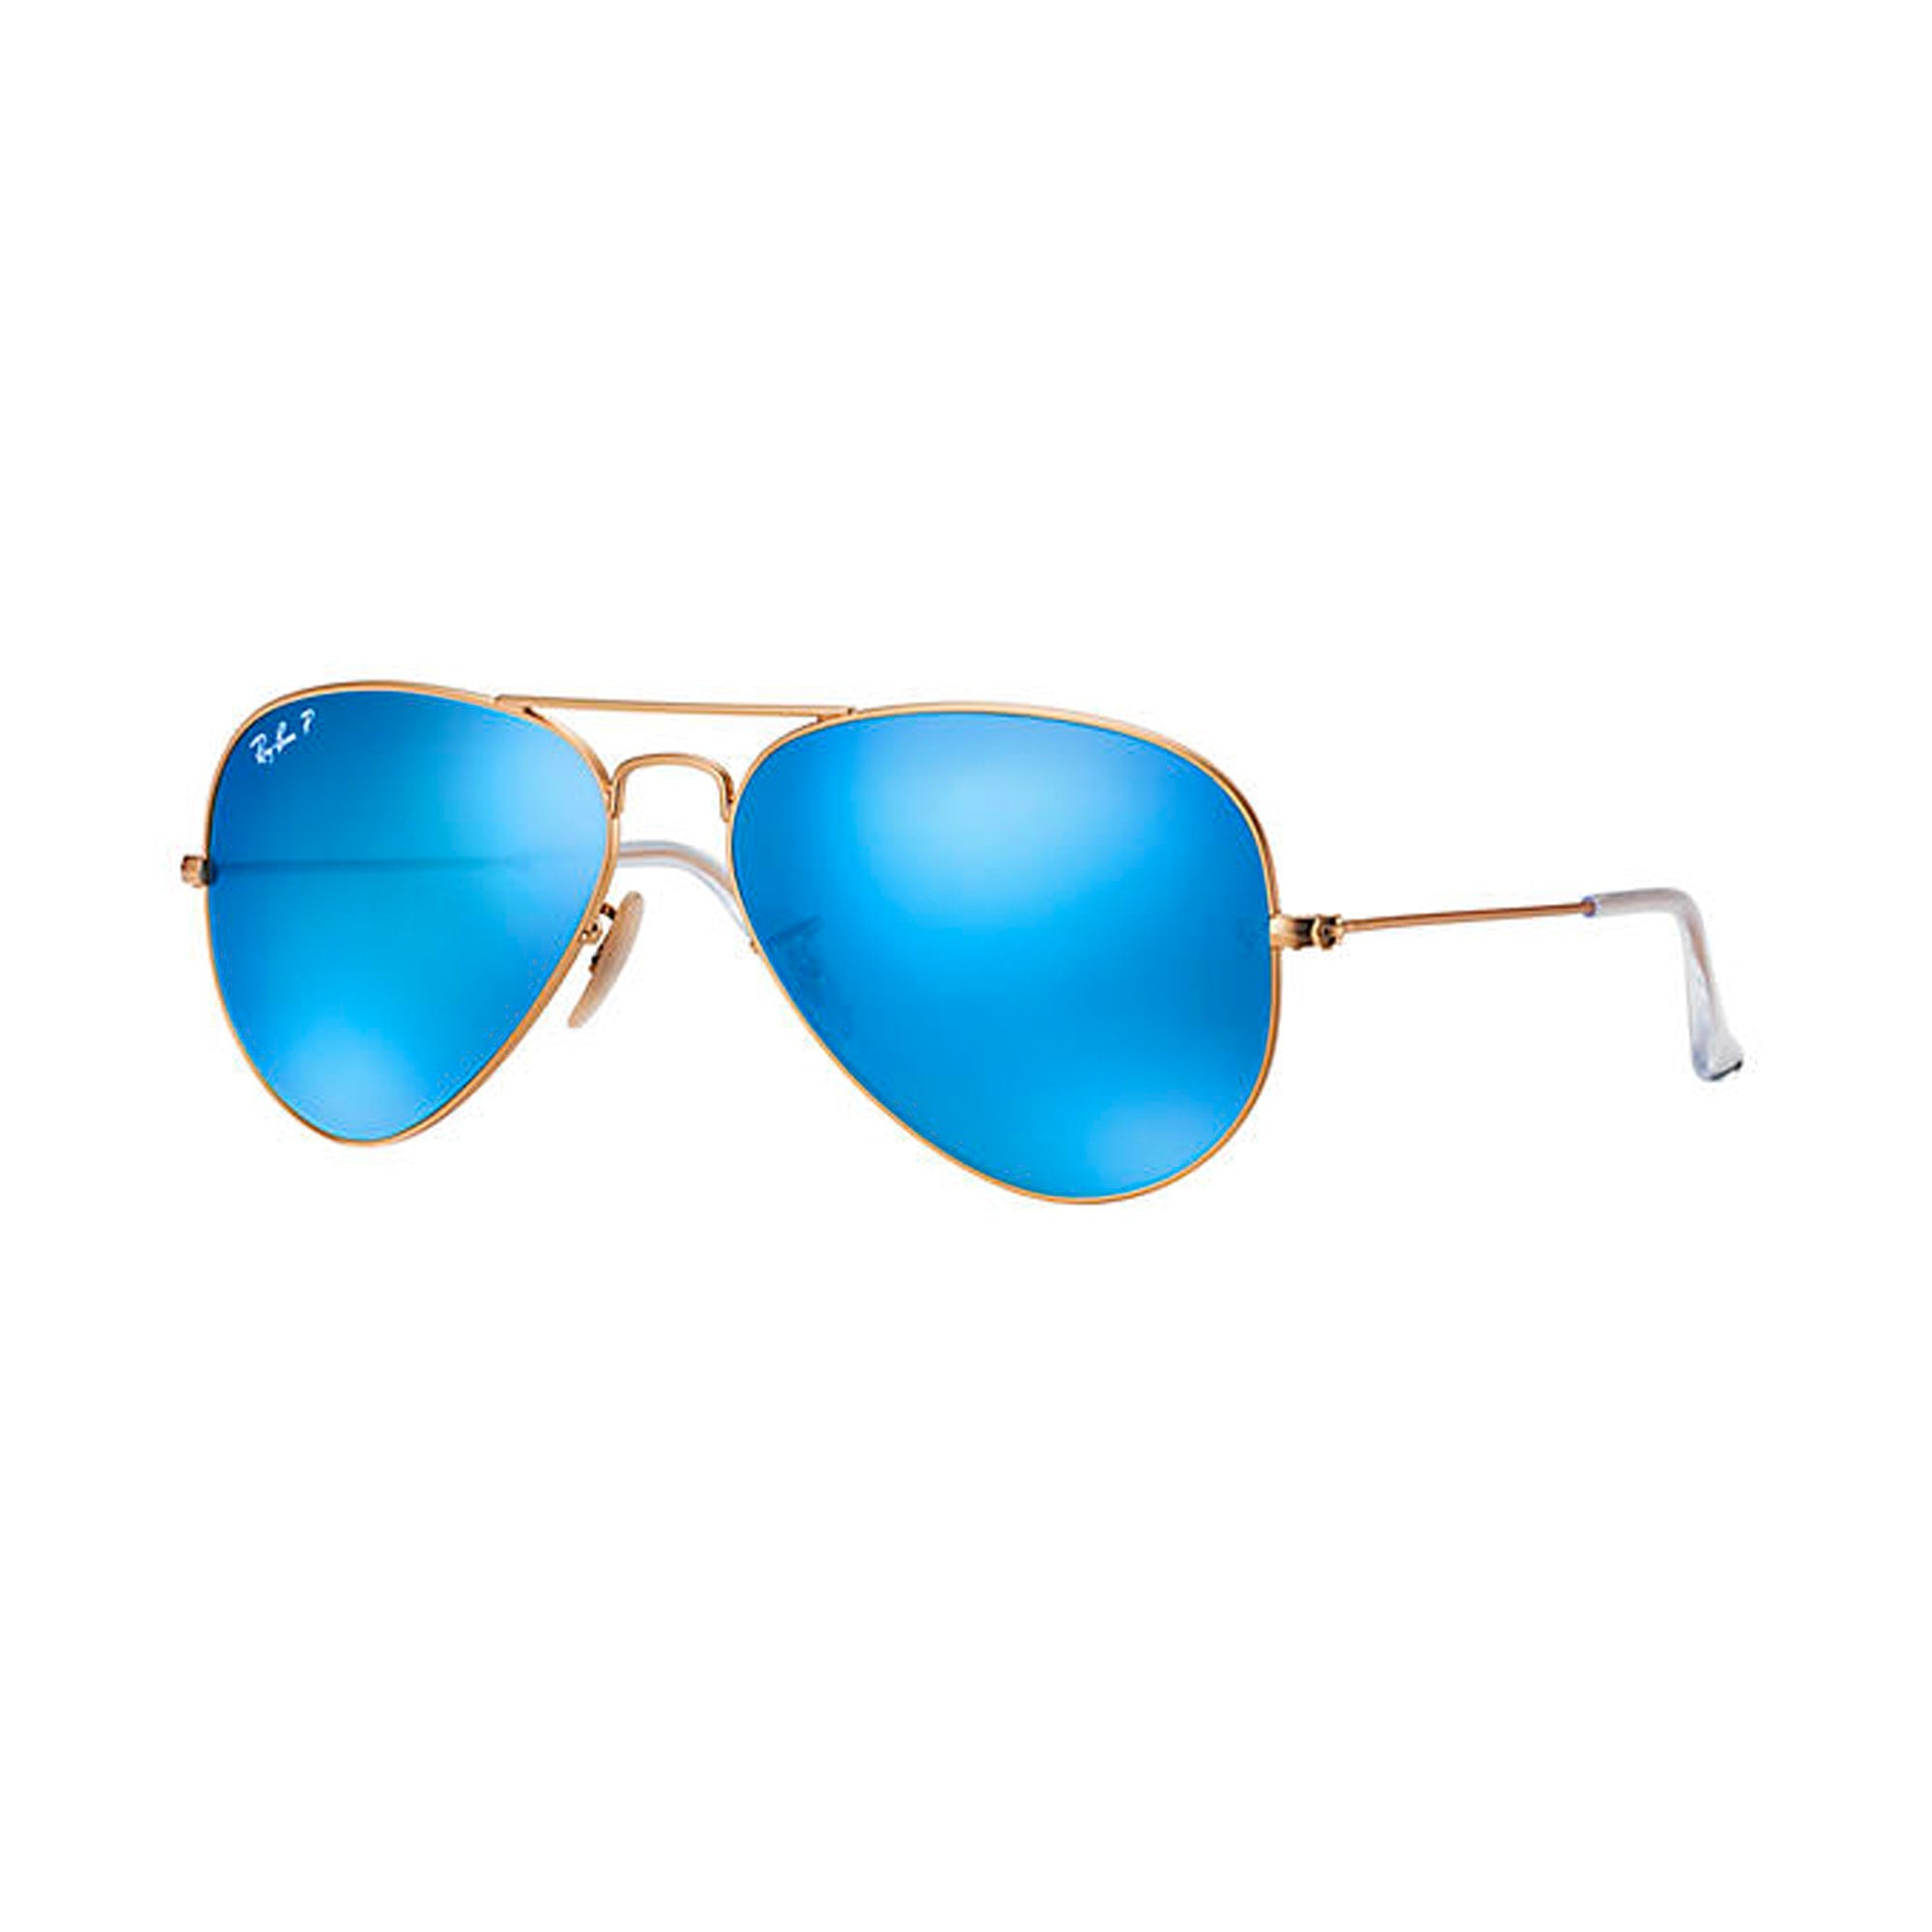 Ray-Ban RB3025 112/4L Aviator Flash Sunglasses - Matte Gold Frame - Polarized Blue Flash Lens - 58mm